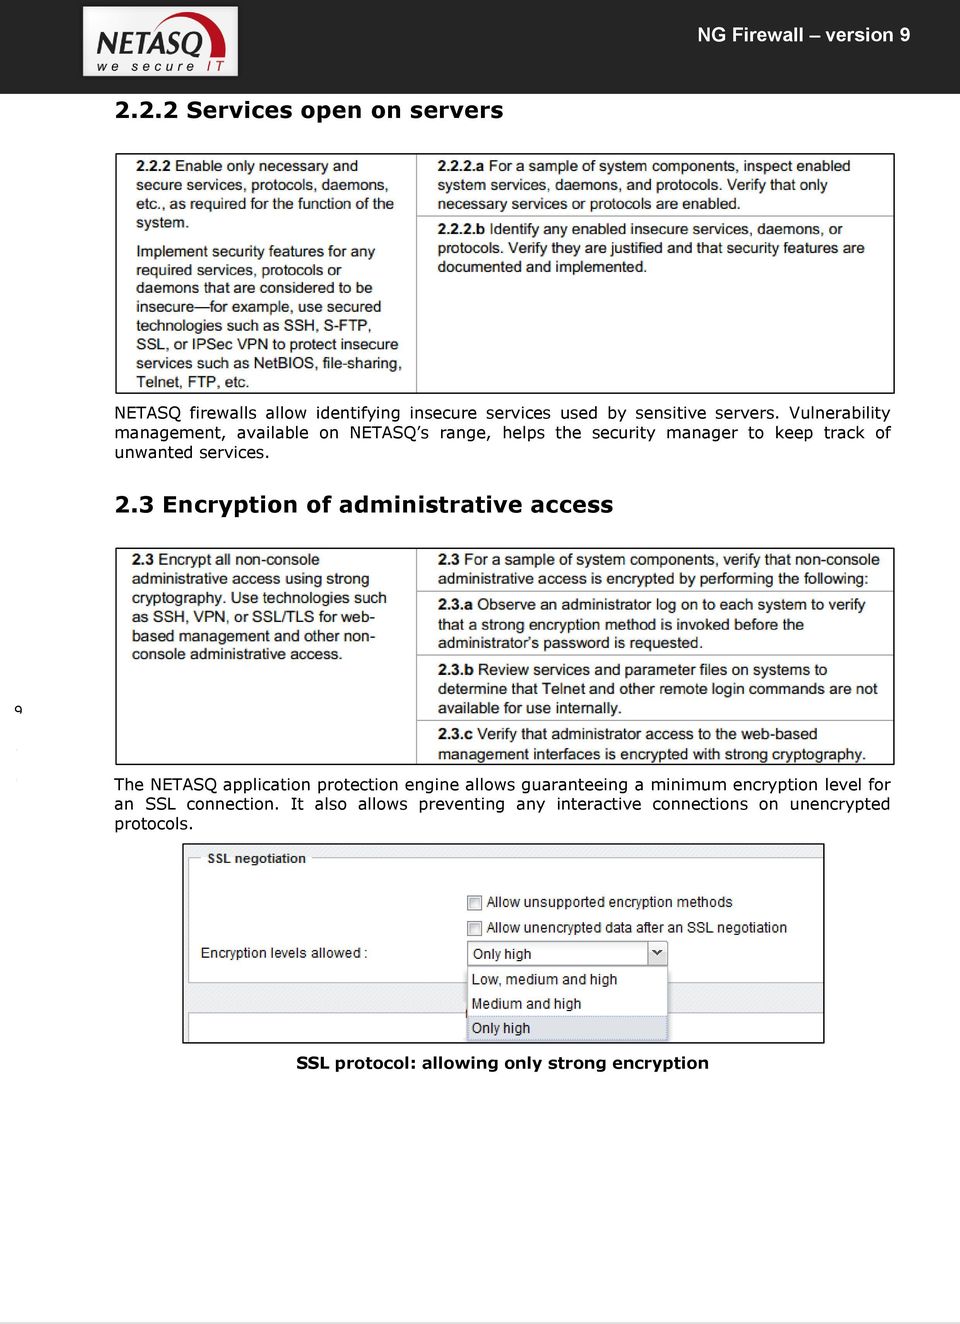 3 Encryption of administrative access 9 The NETASQ application protection engine allows guaranteeing a minimum encryption